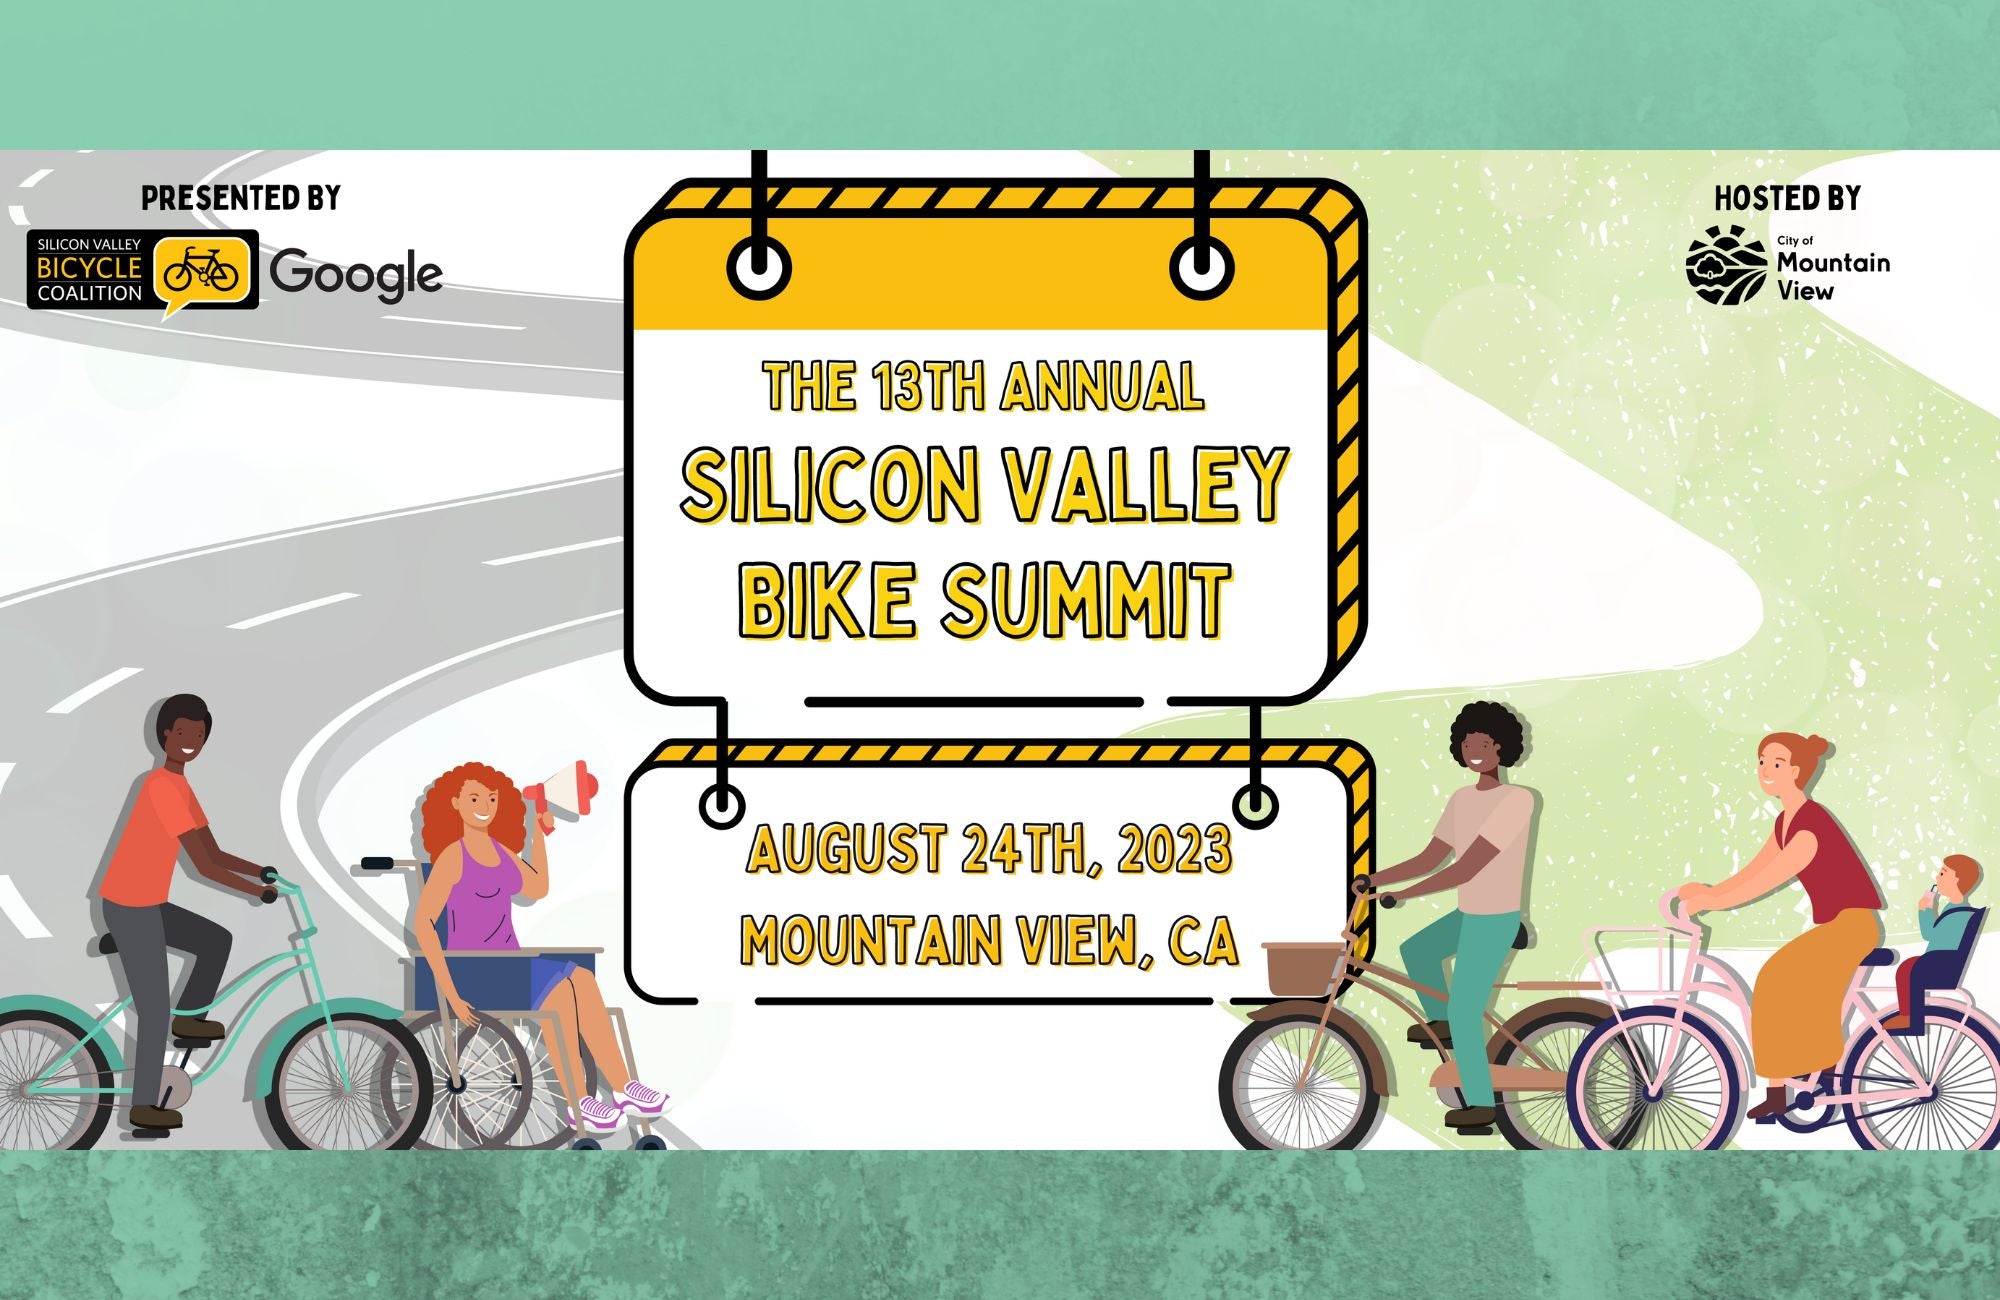 Emerald Presents the 13th Annual Silicon Valley Bike Summit